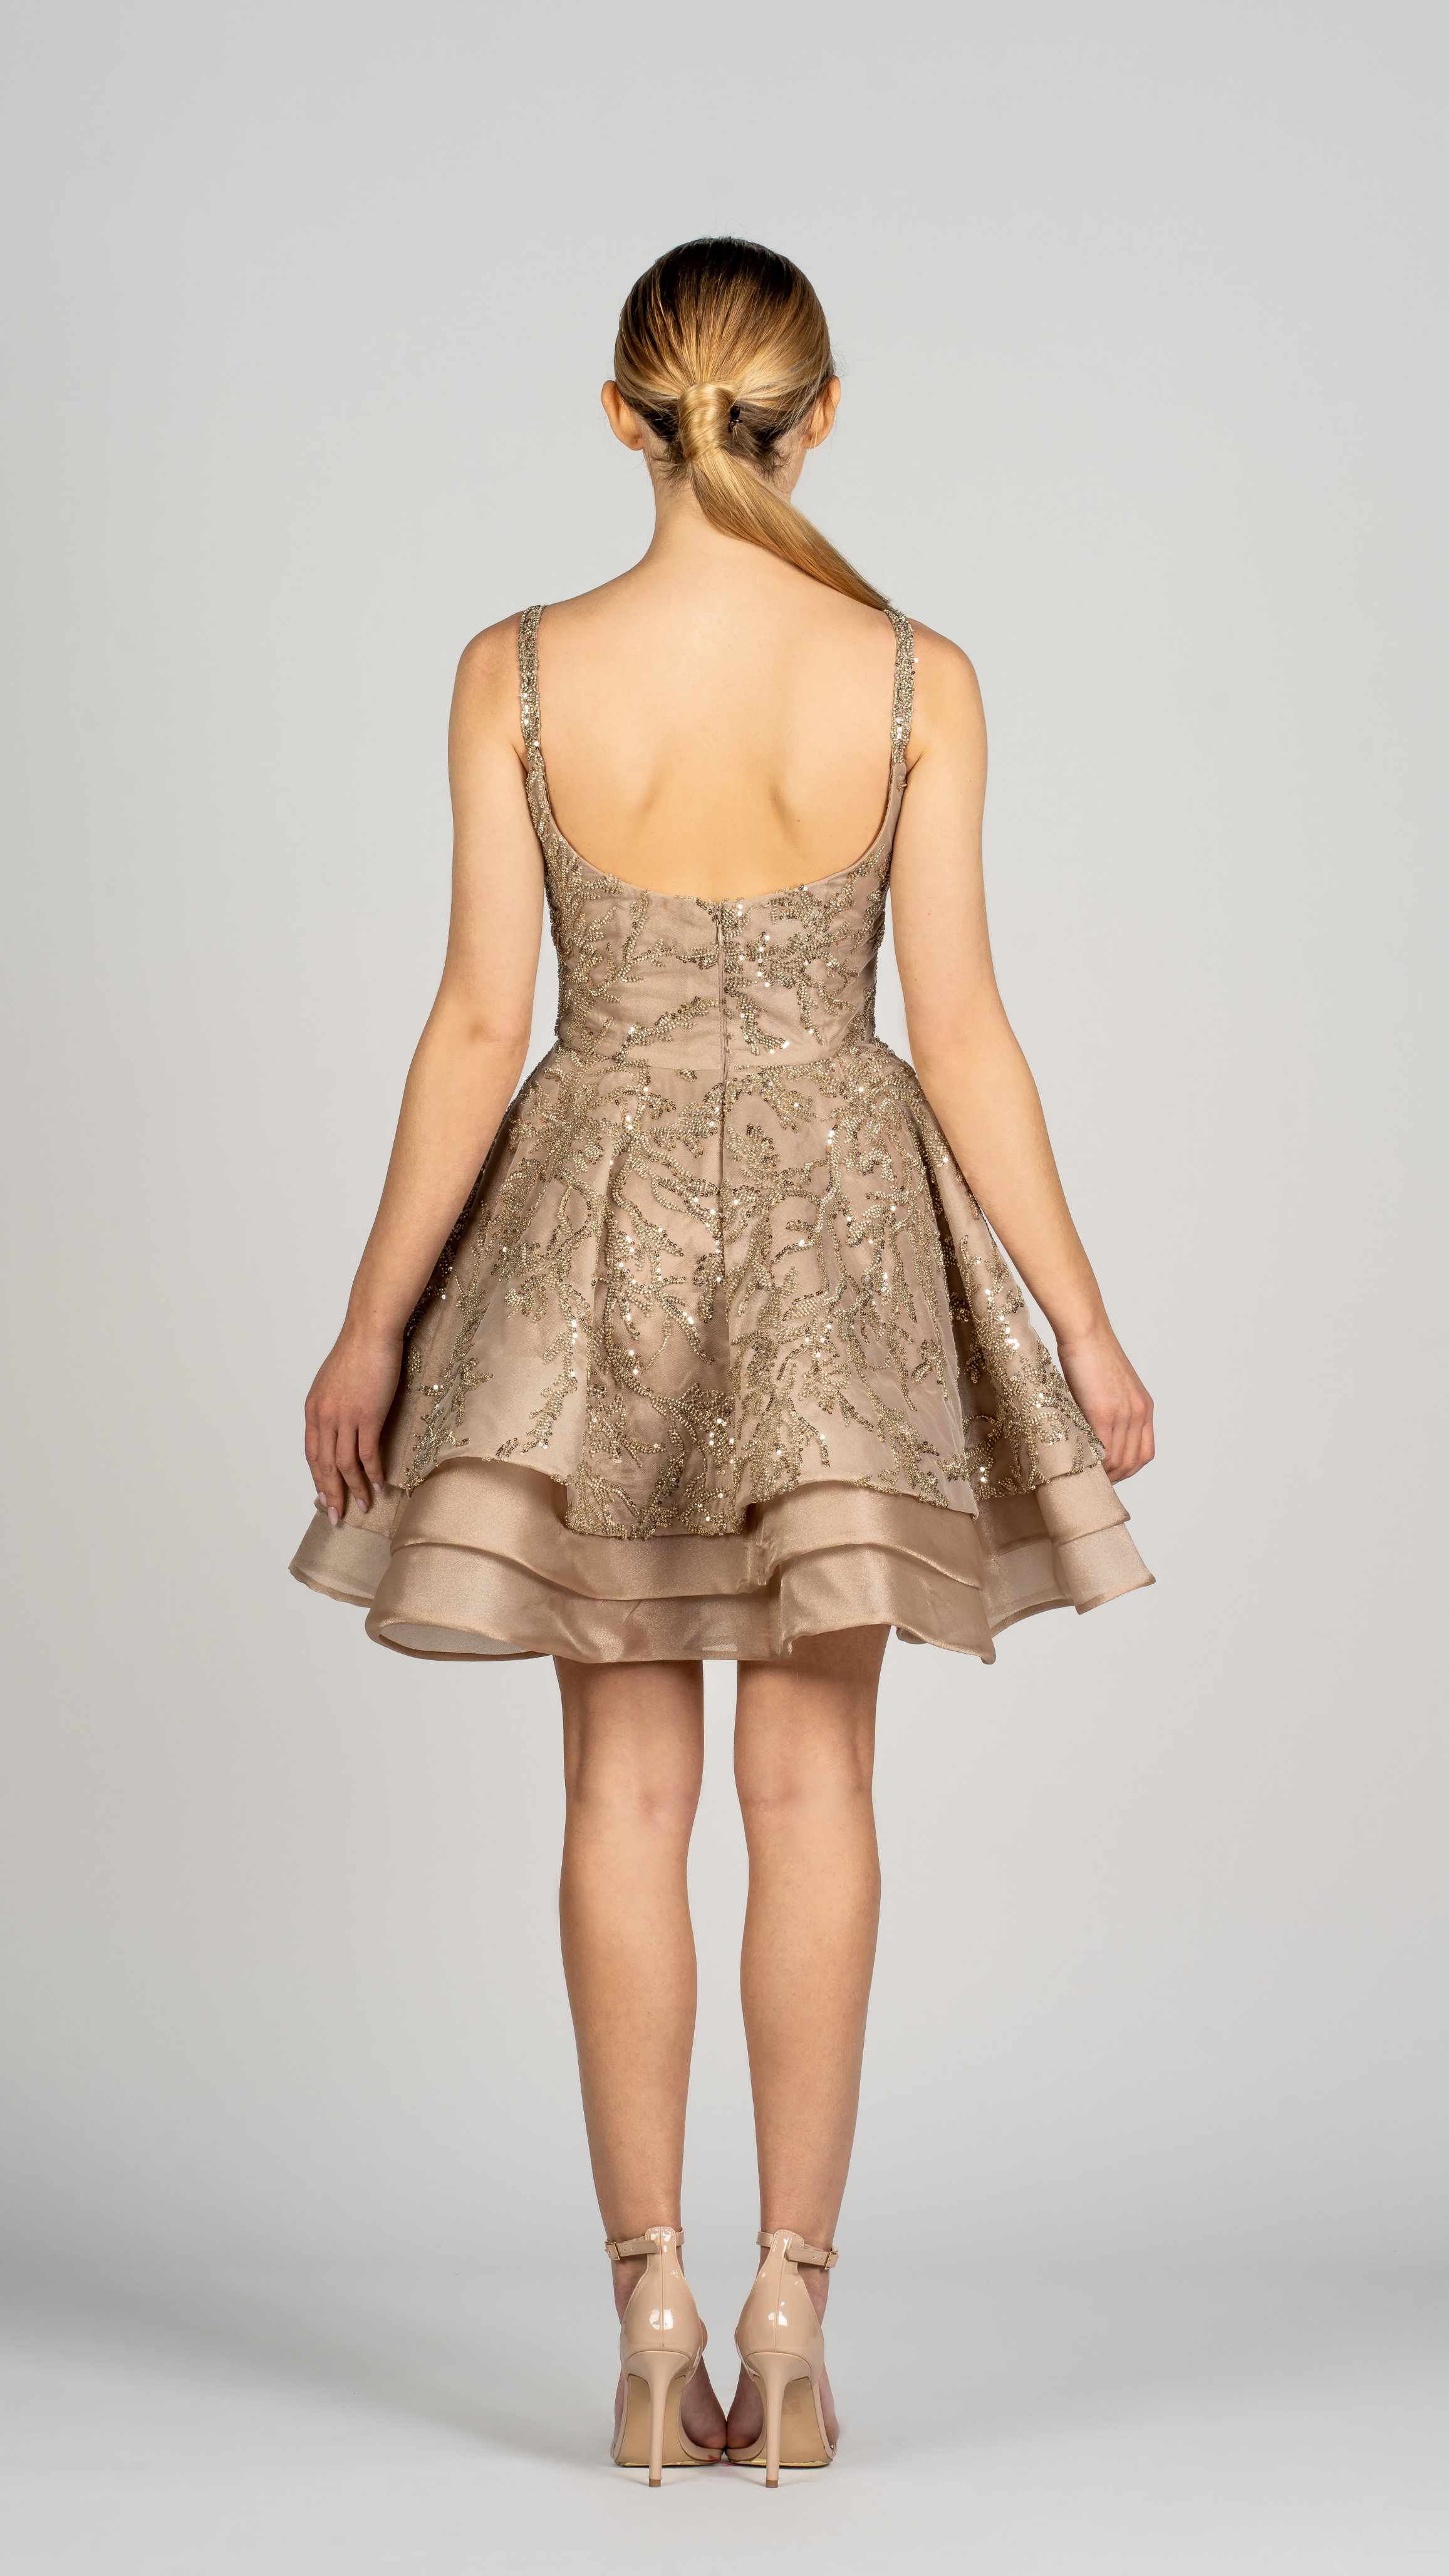 Short Dress with Ruffle Skirt